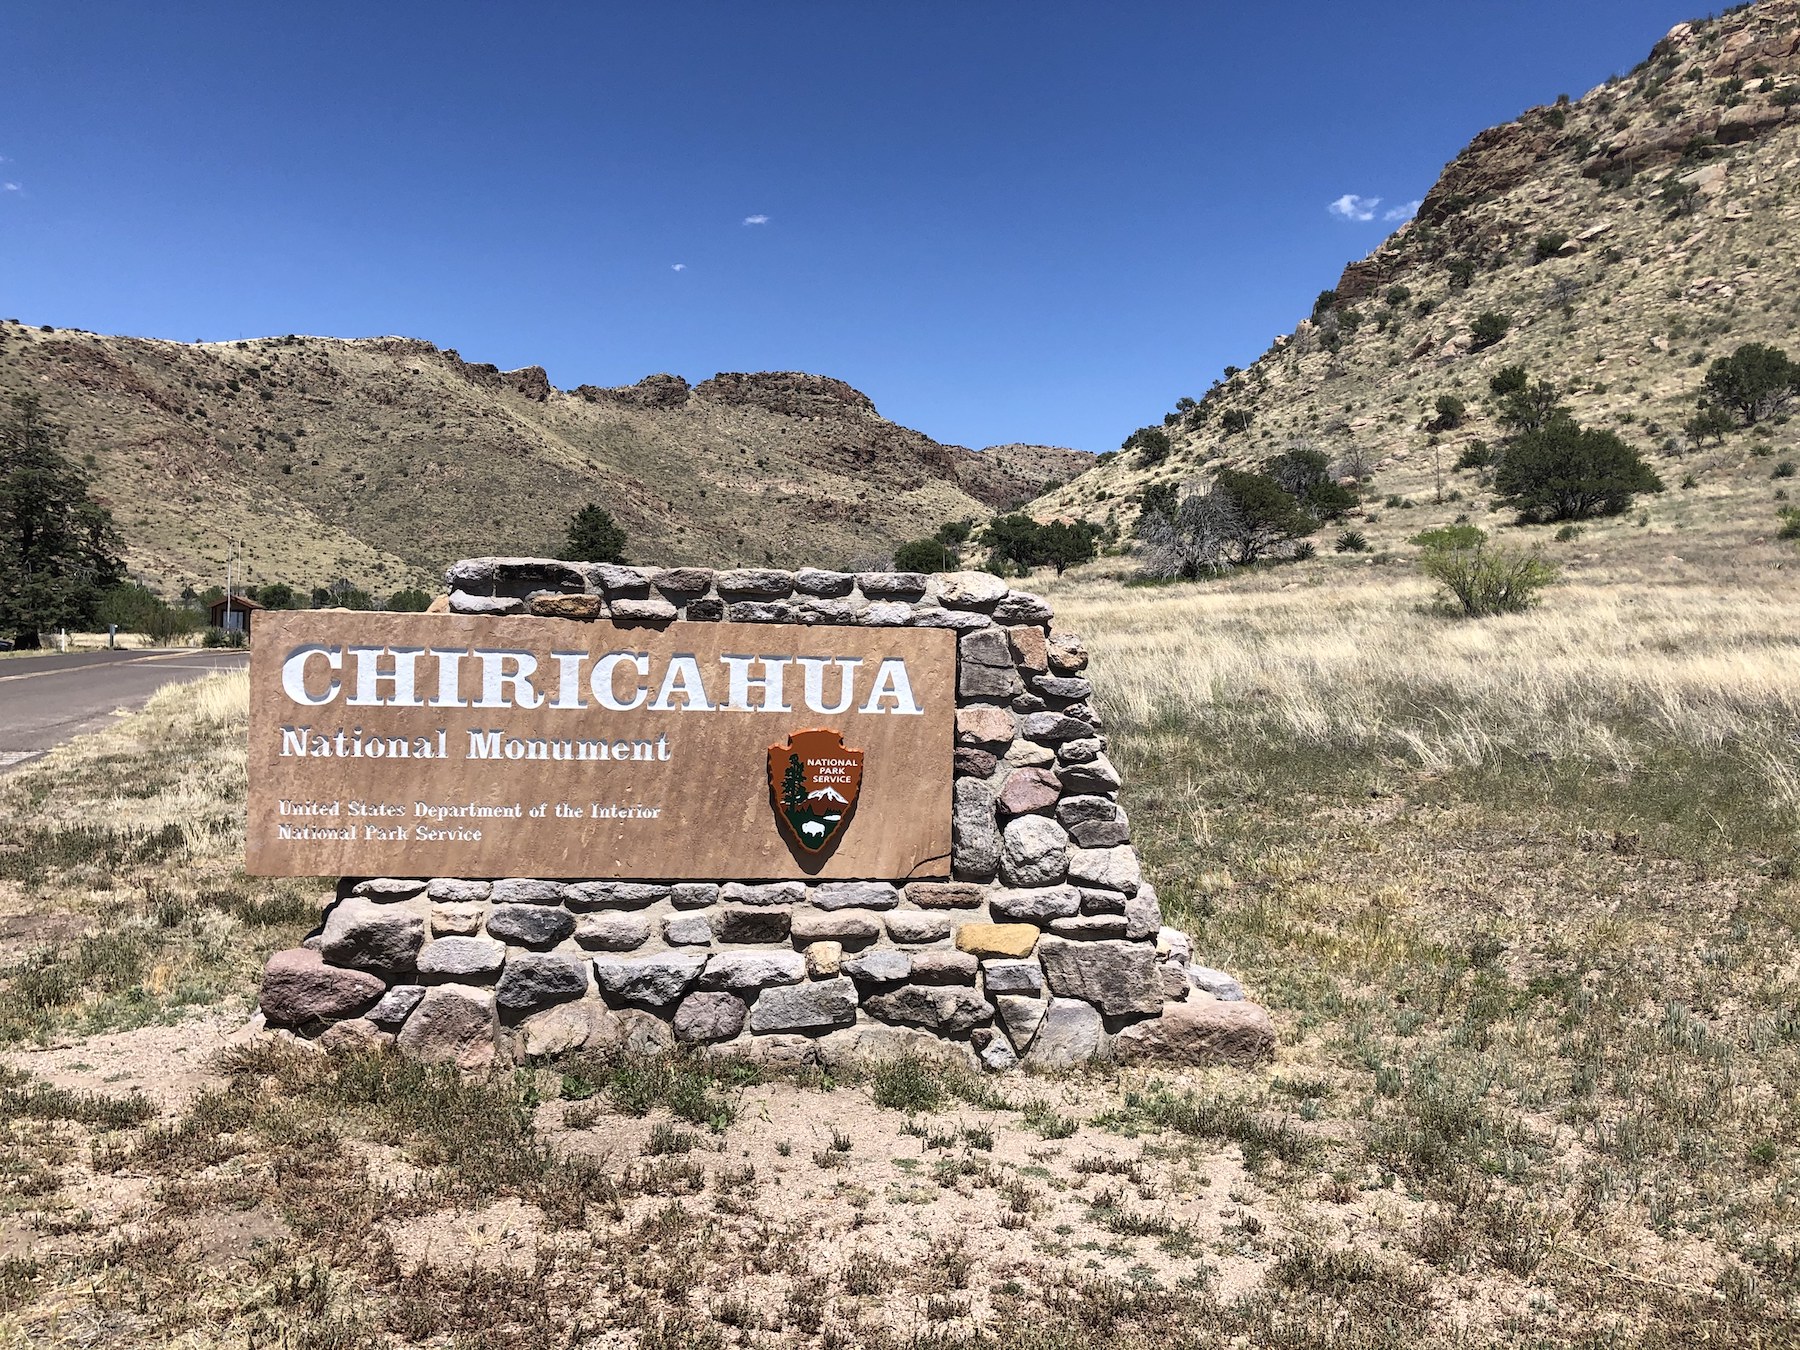 Monumento nacional de Chiricahua: 9 cosas que saber antes de visitar - 373